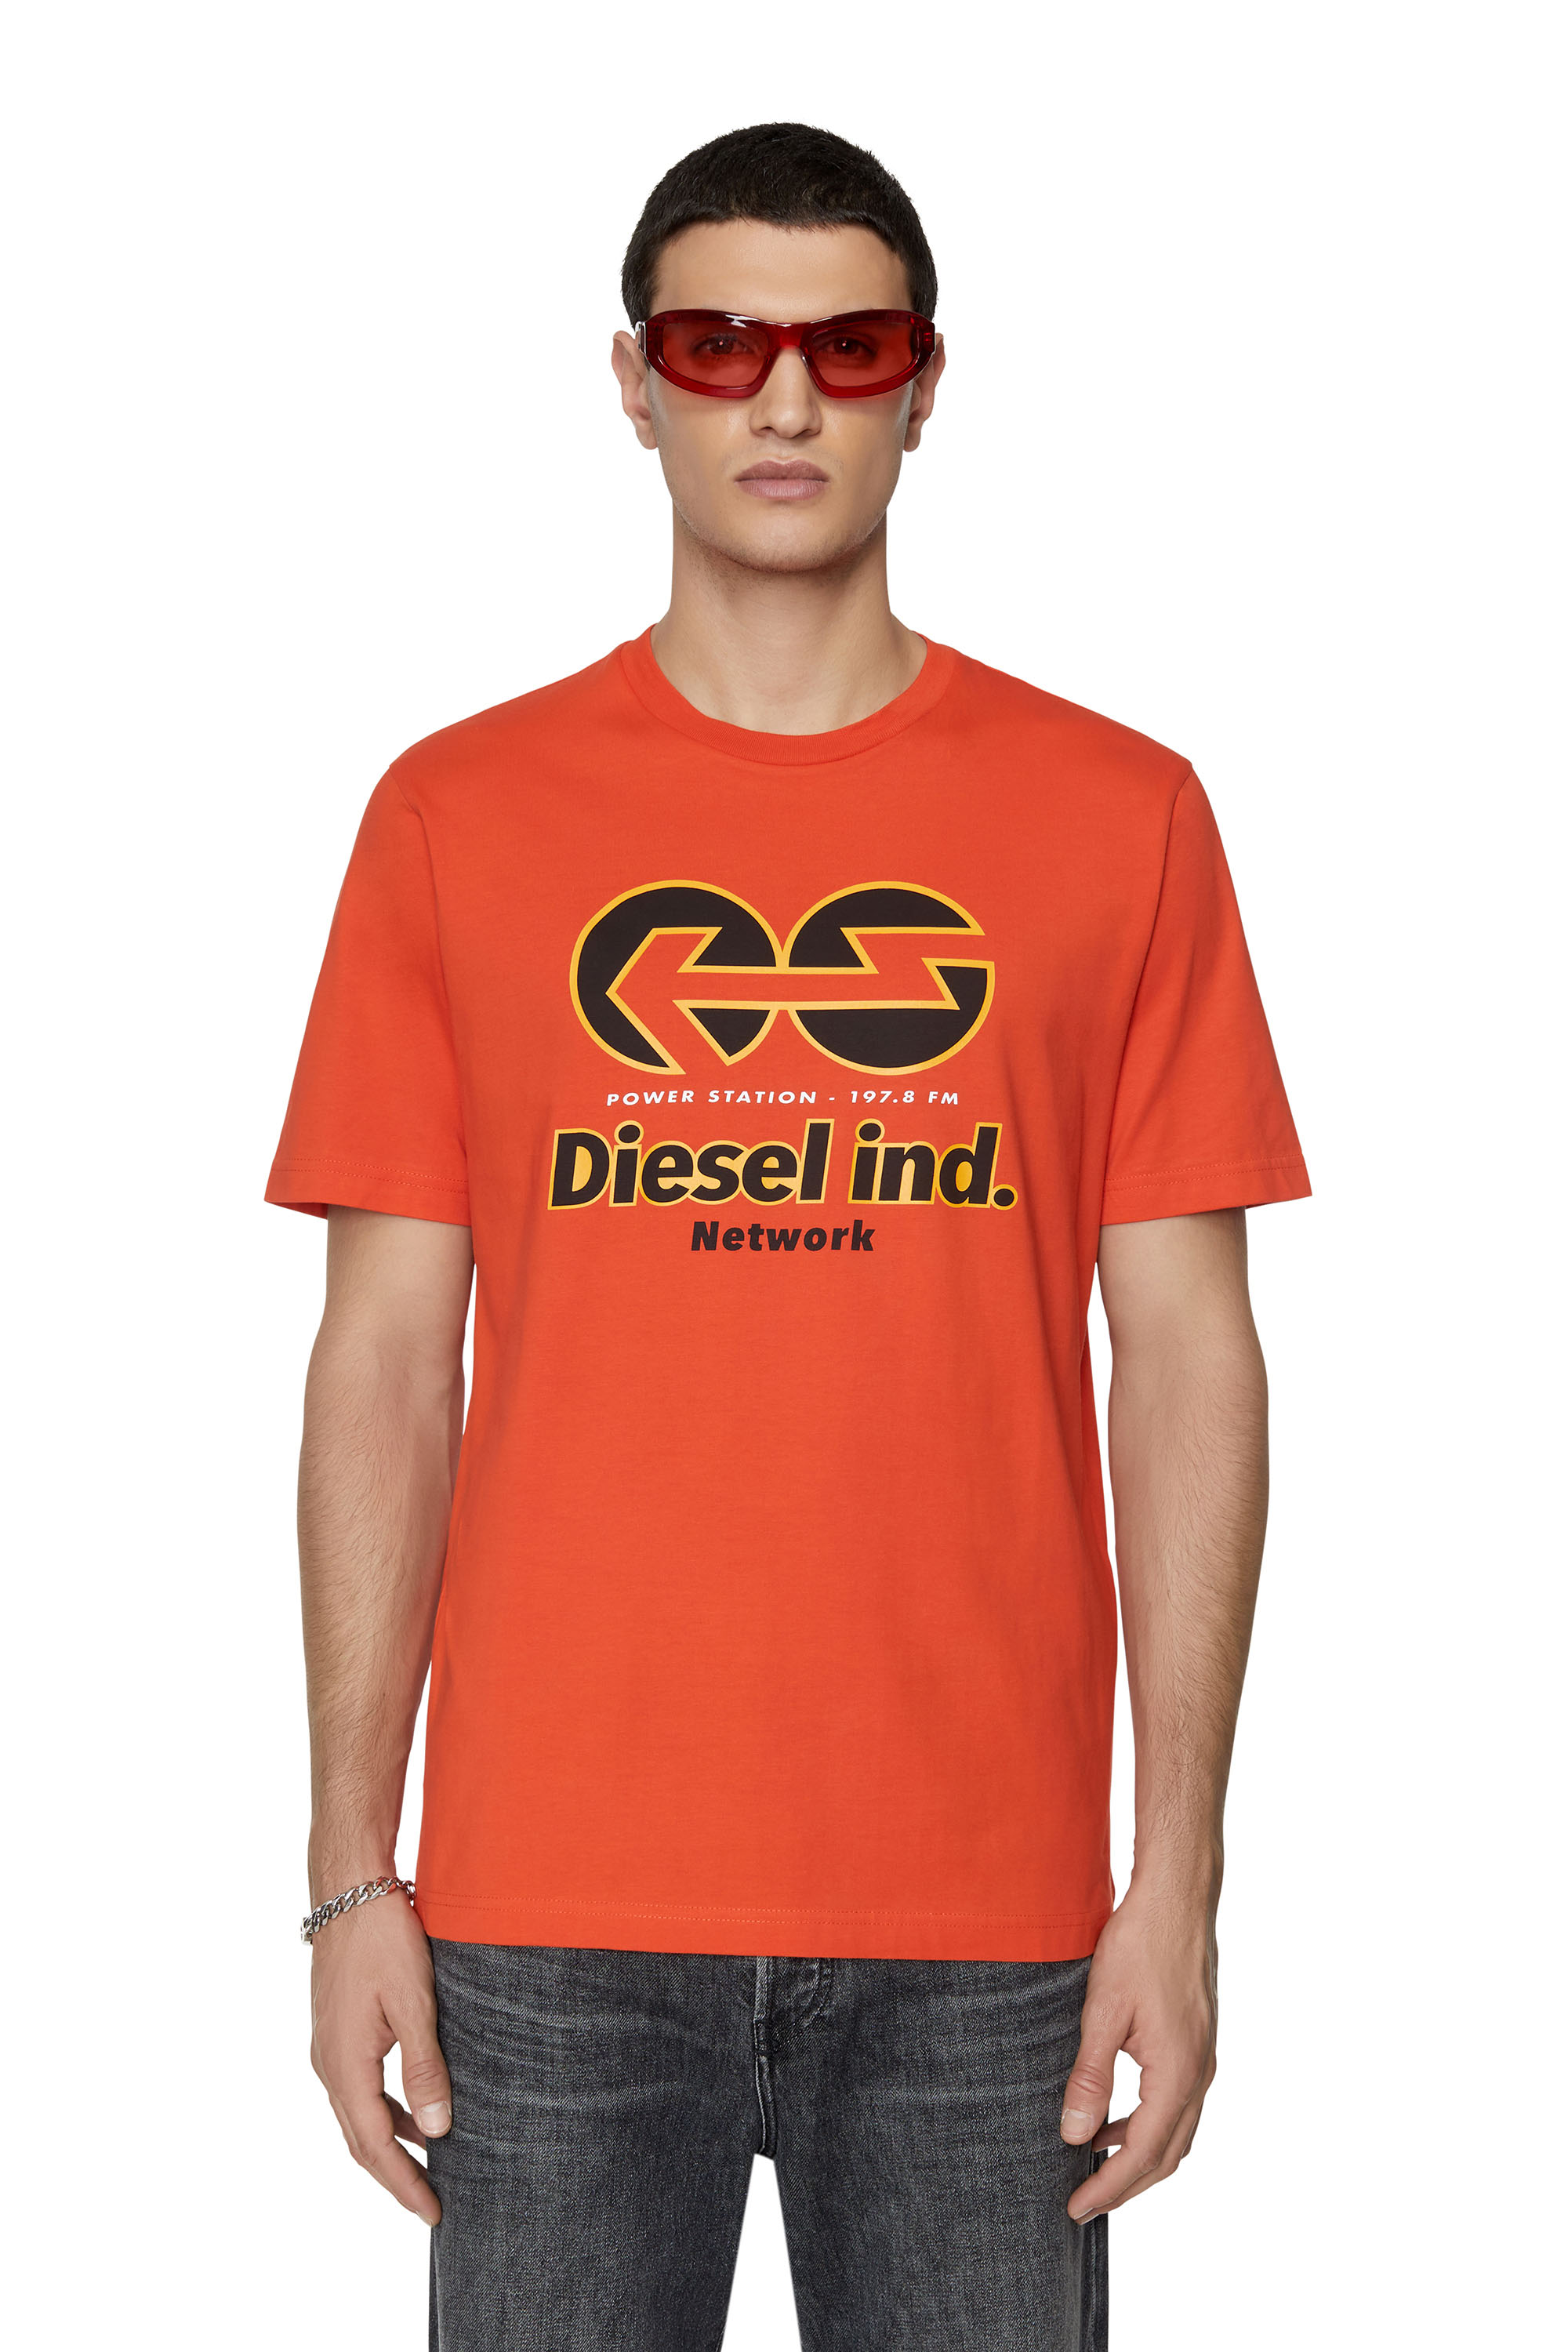 Diesel - T-JUST-E18, Orange - Image 2